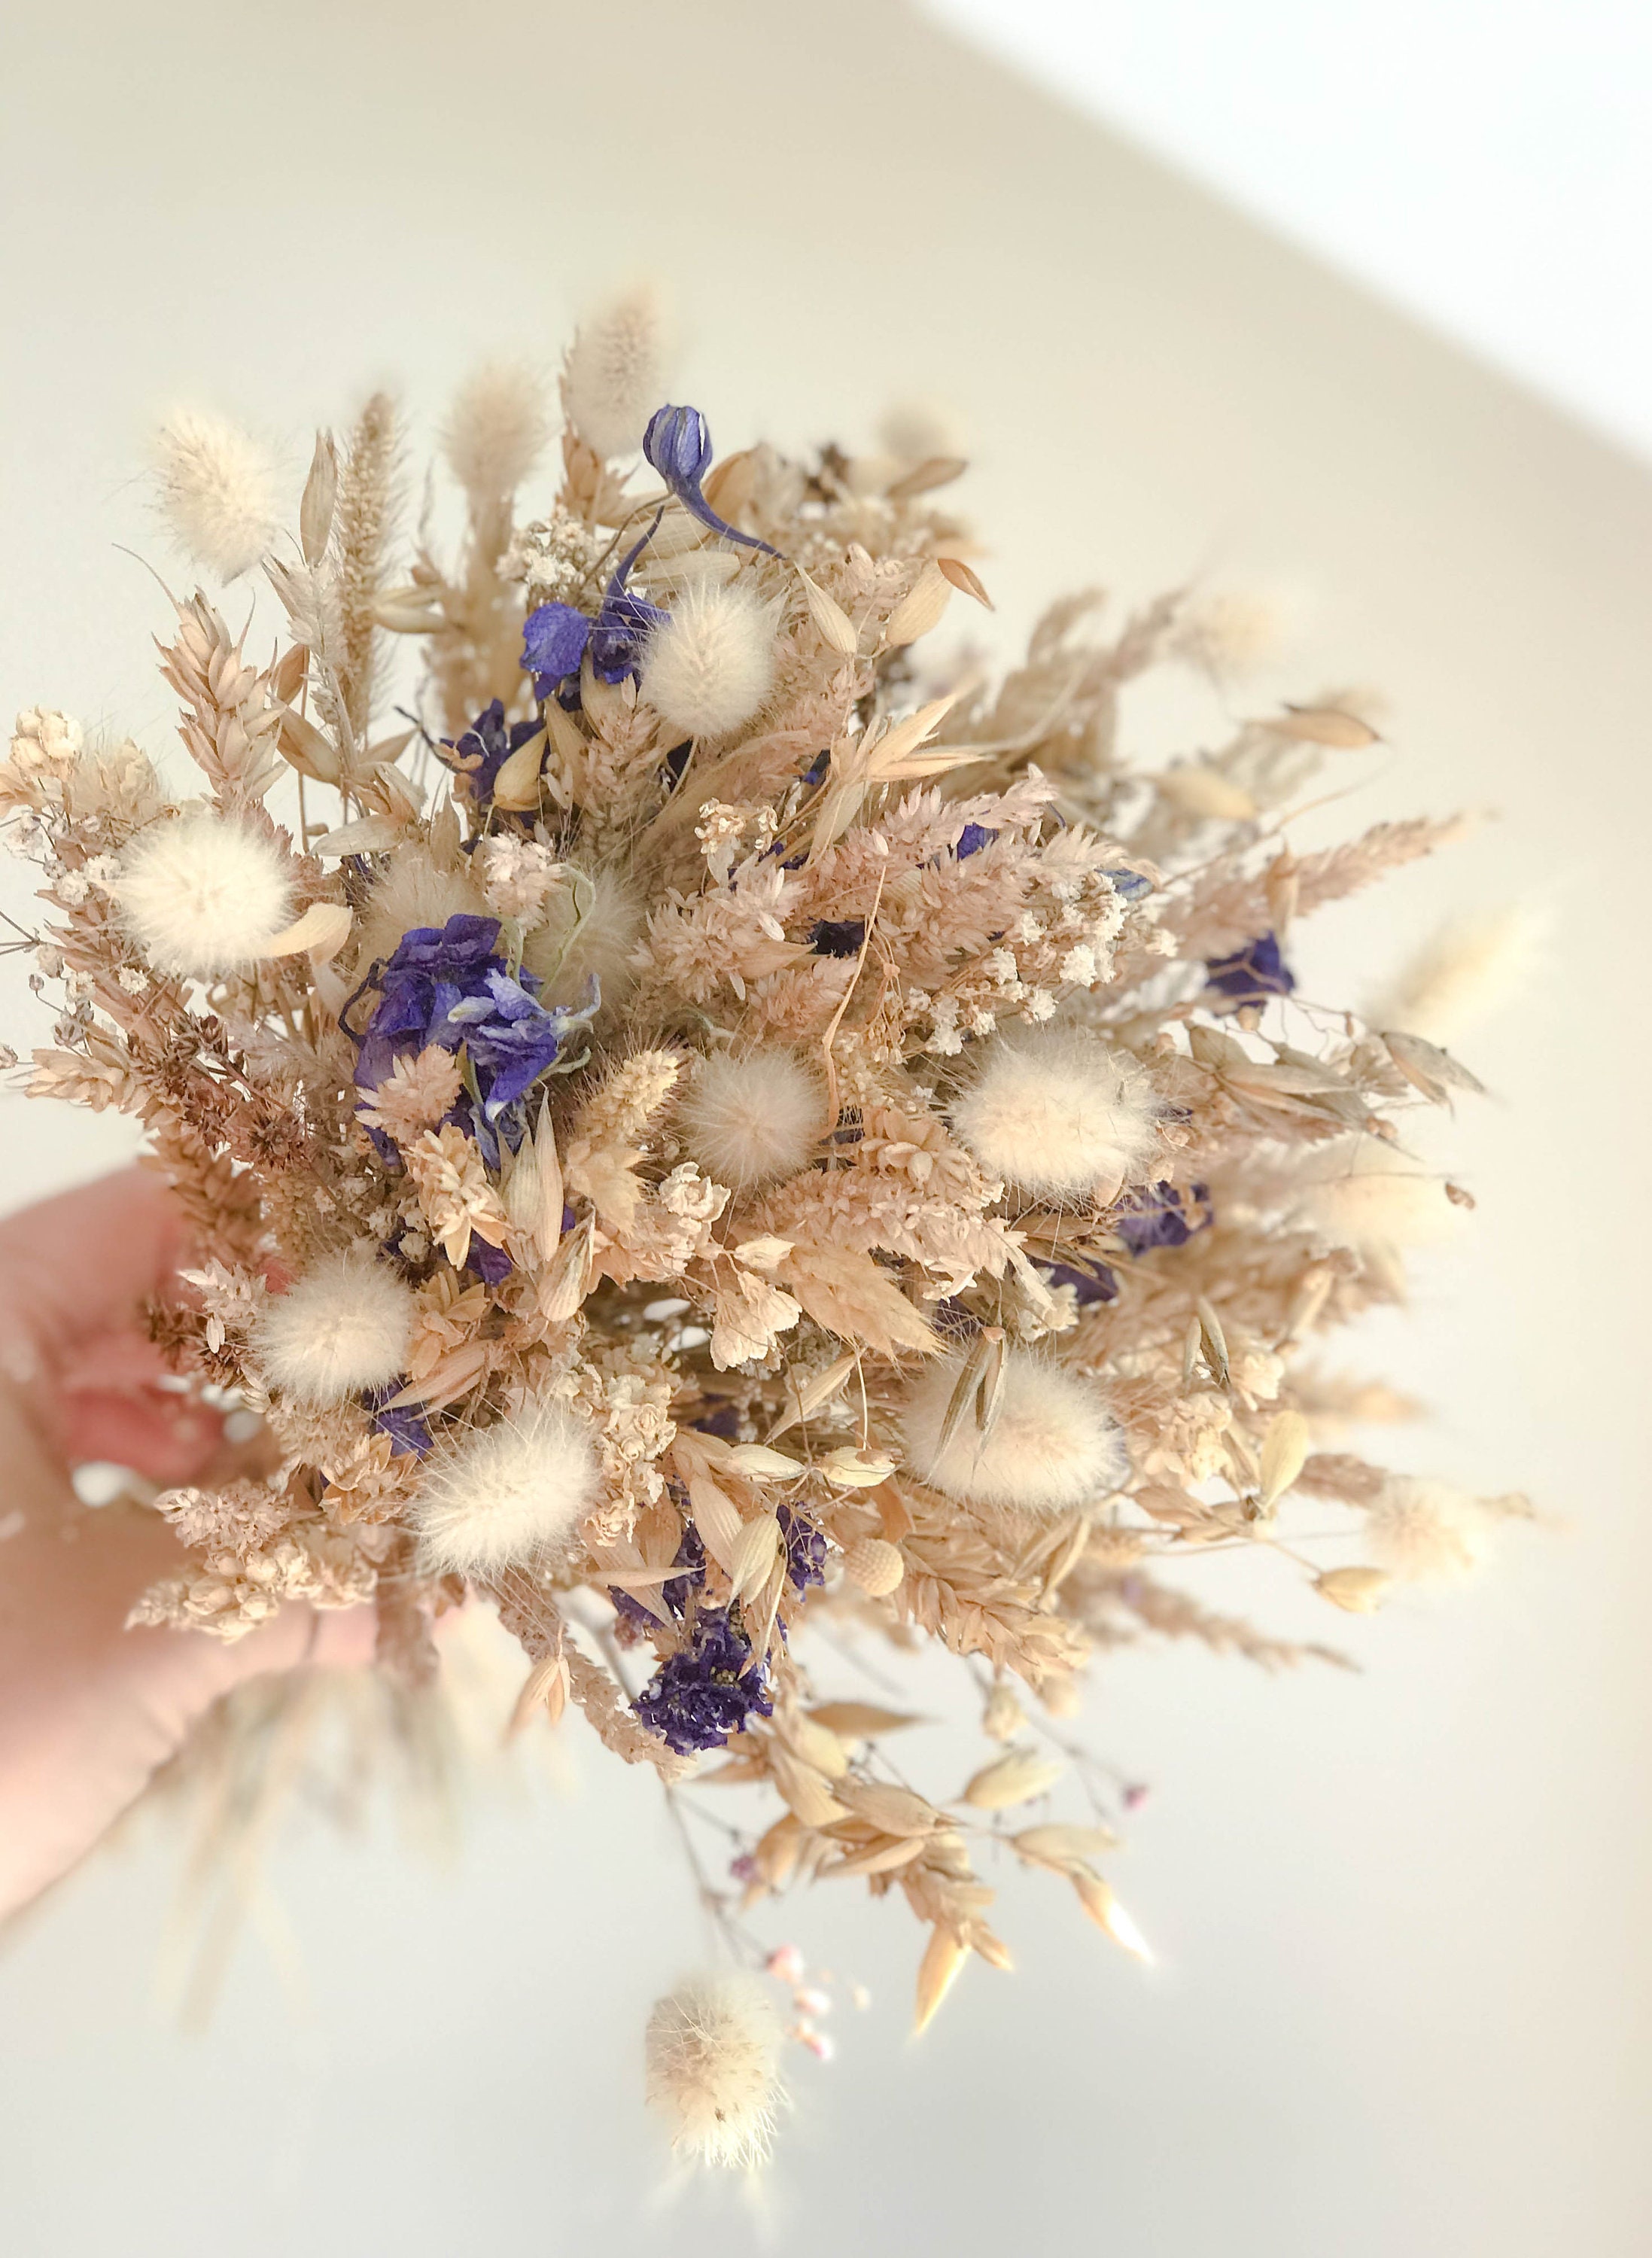 Dried Hydrangea Bouquet, Chic Home Decor, Dried Hydrangea Flowers, Make  Great Dried Arrangements, Boho Style Flower 